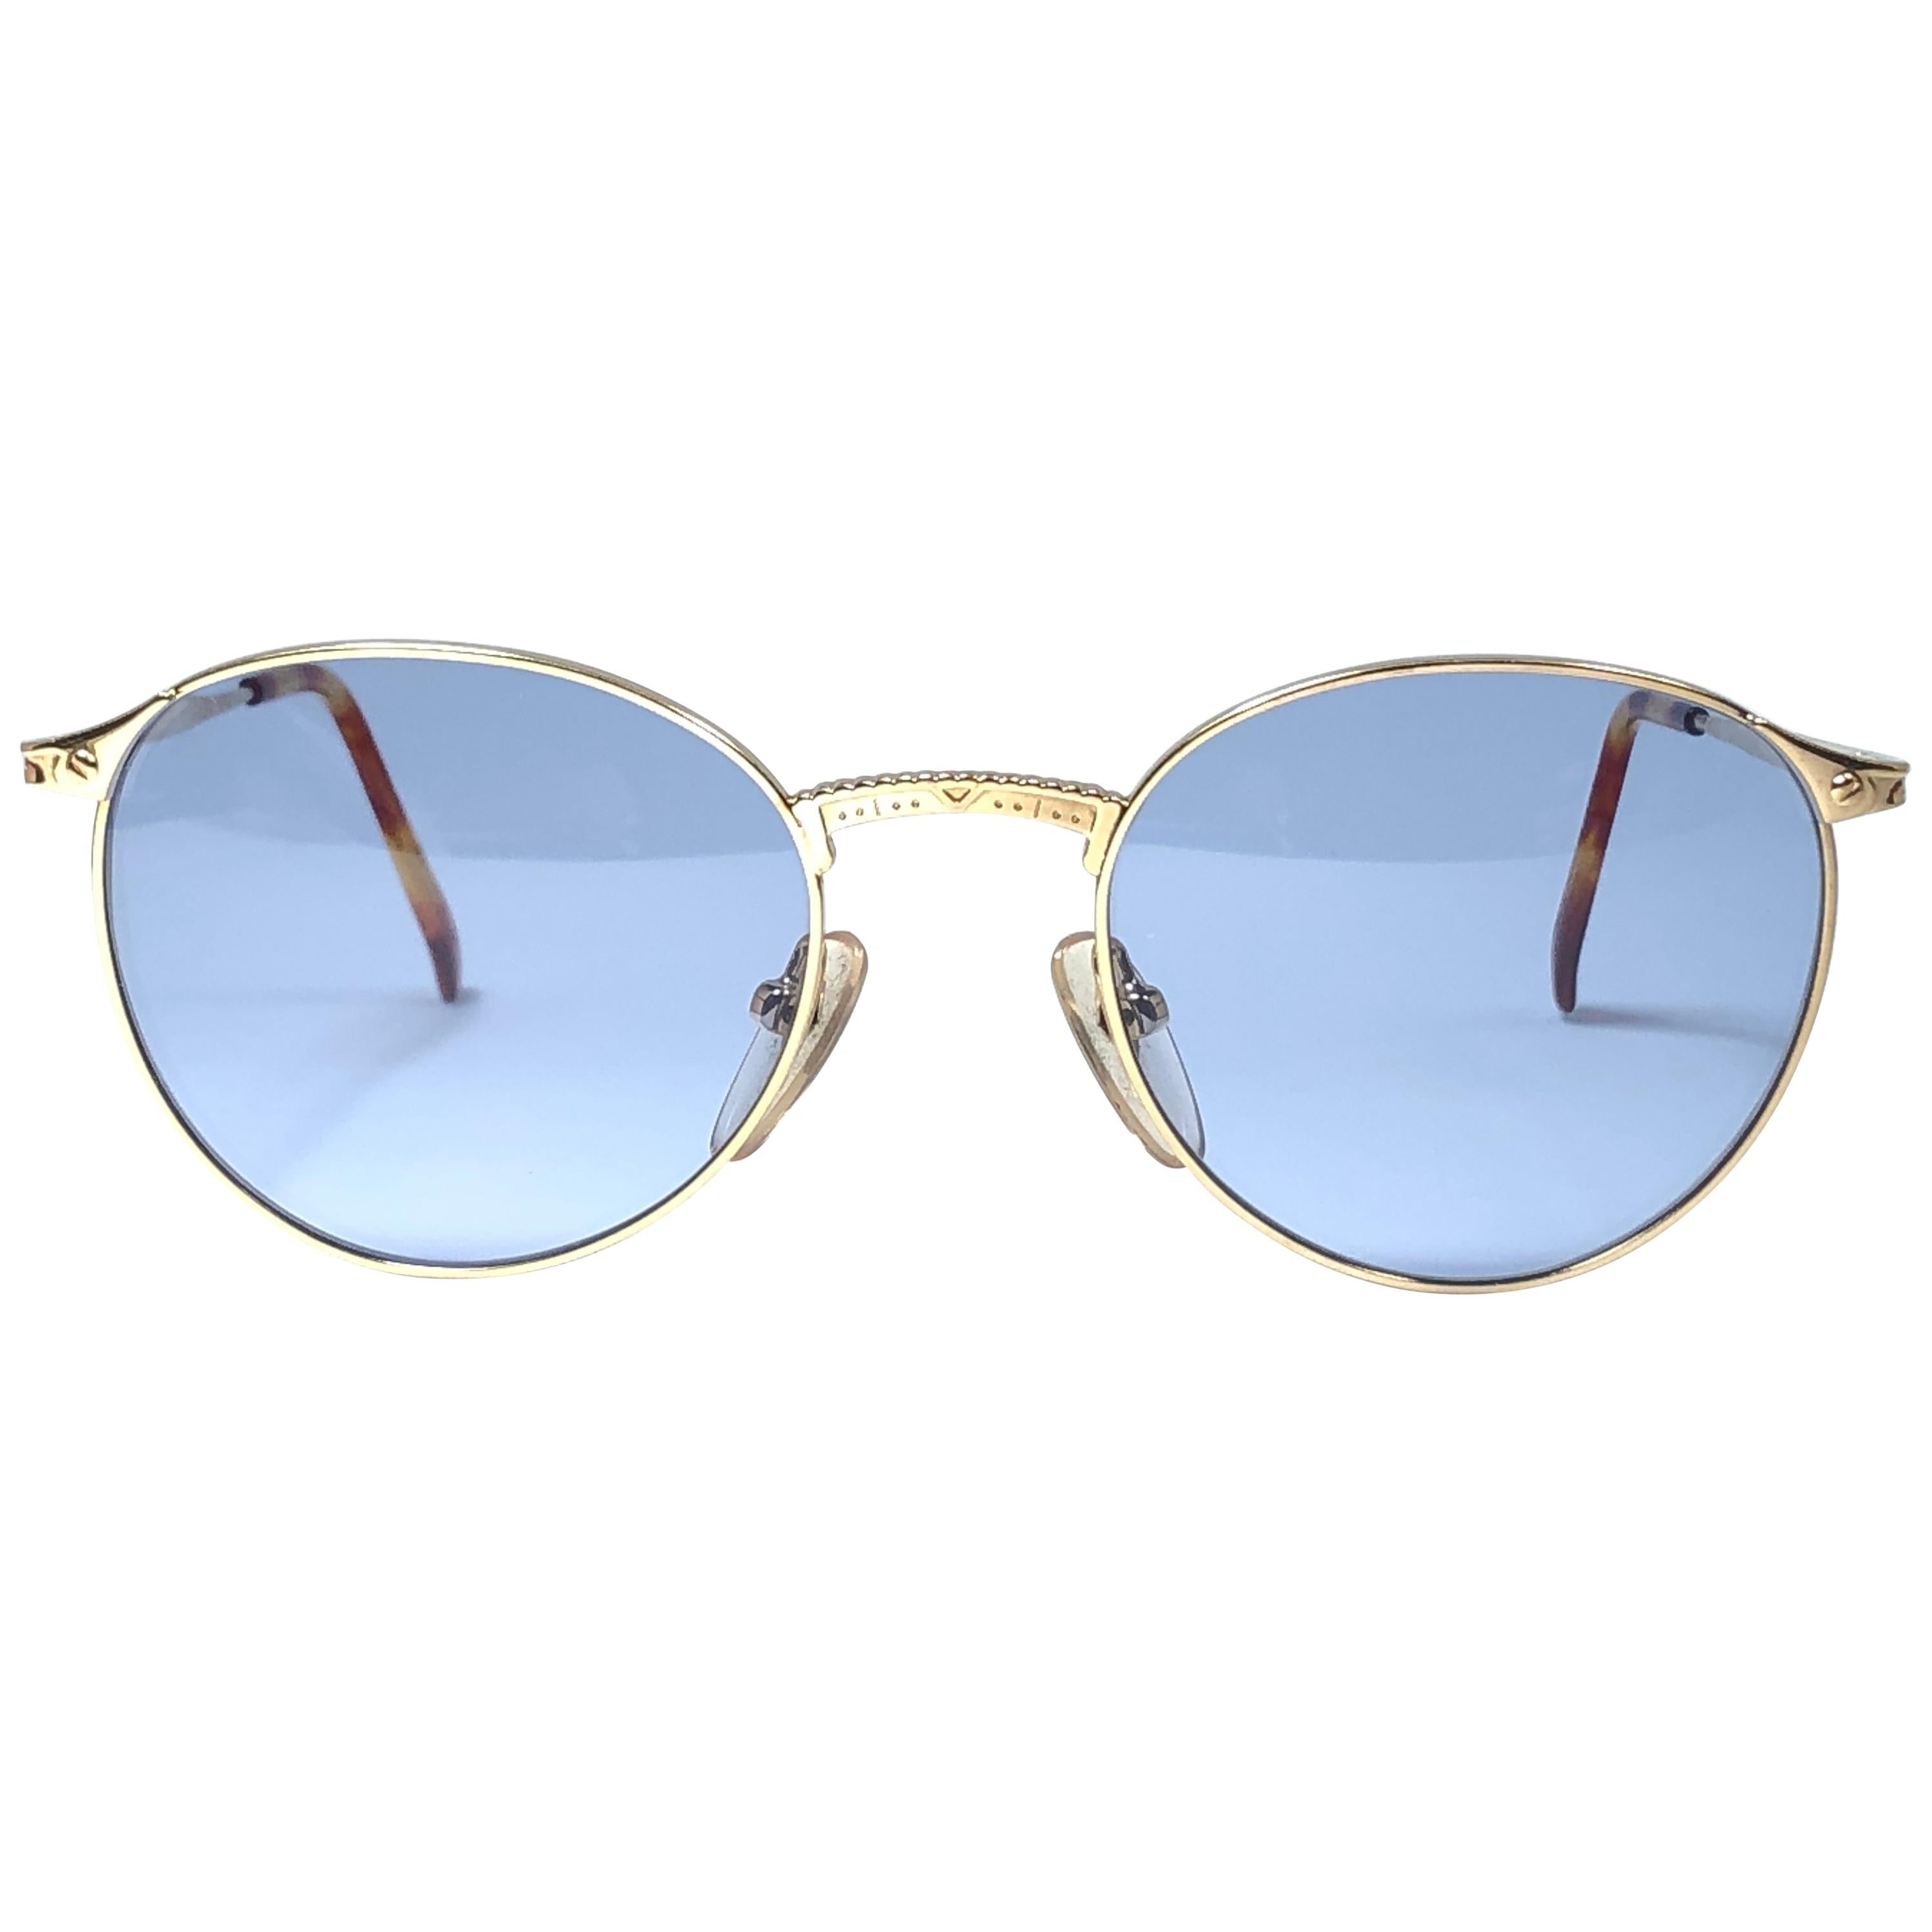 New Jean Paul Gaultier 57 3172 Gold Sunglasses 1990's Japan 